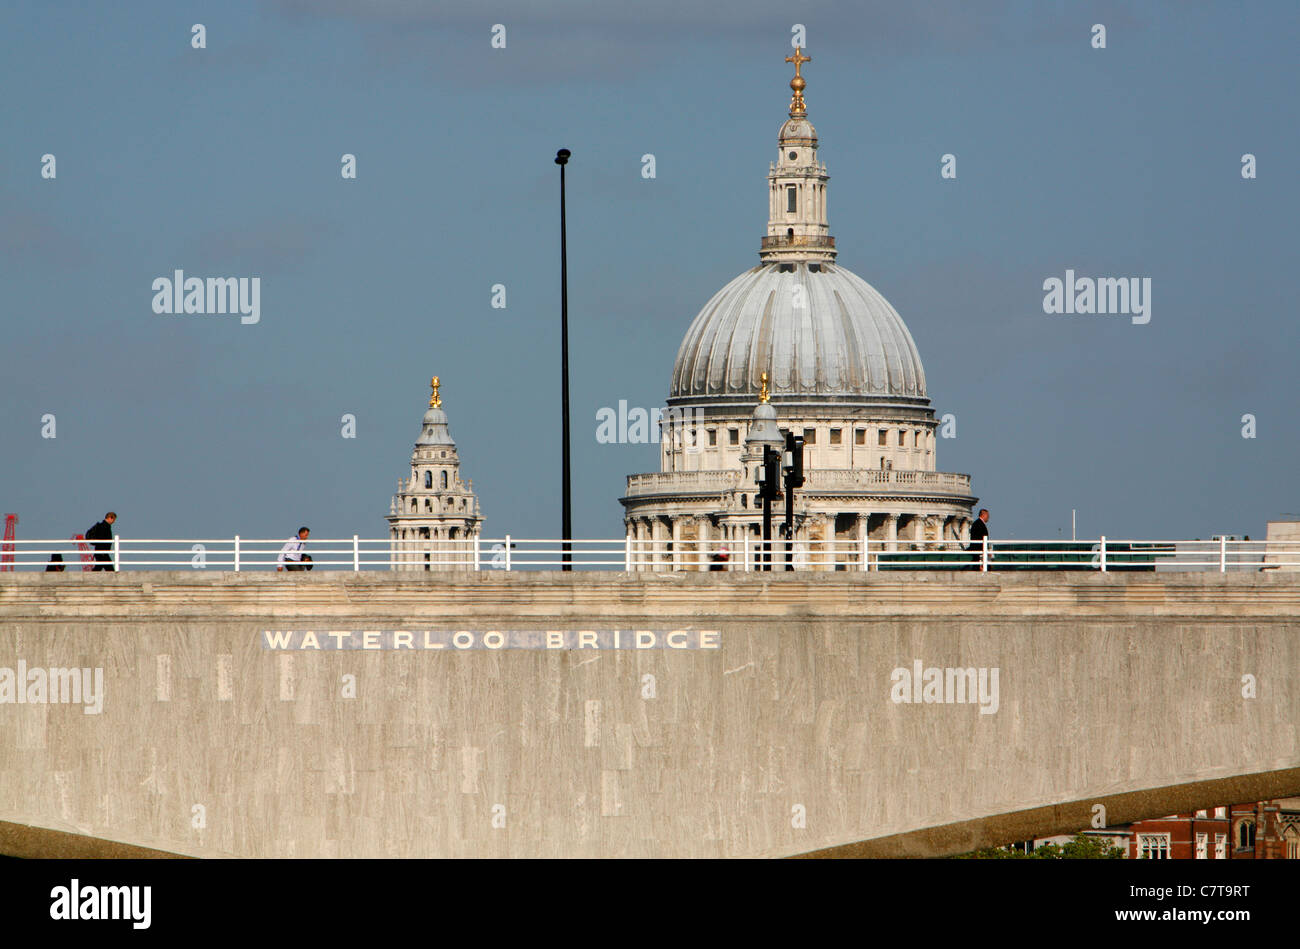 Looking across Waterloo Bridge to St Paul's Cathedral, London, UK Stock Photo